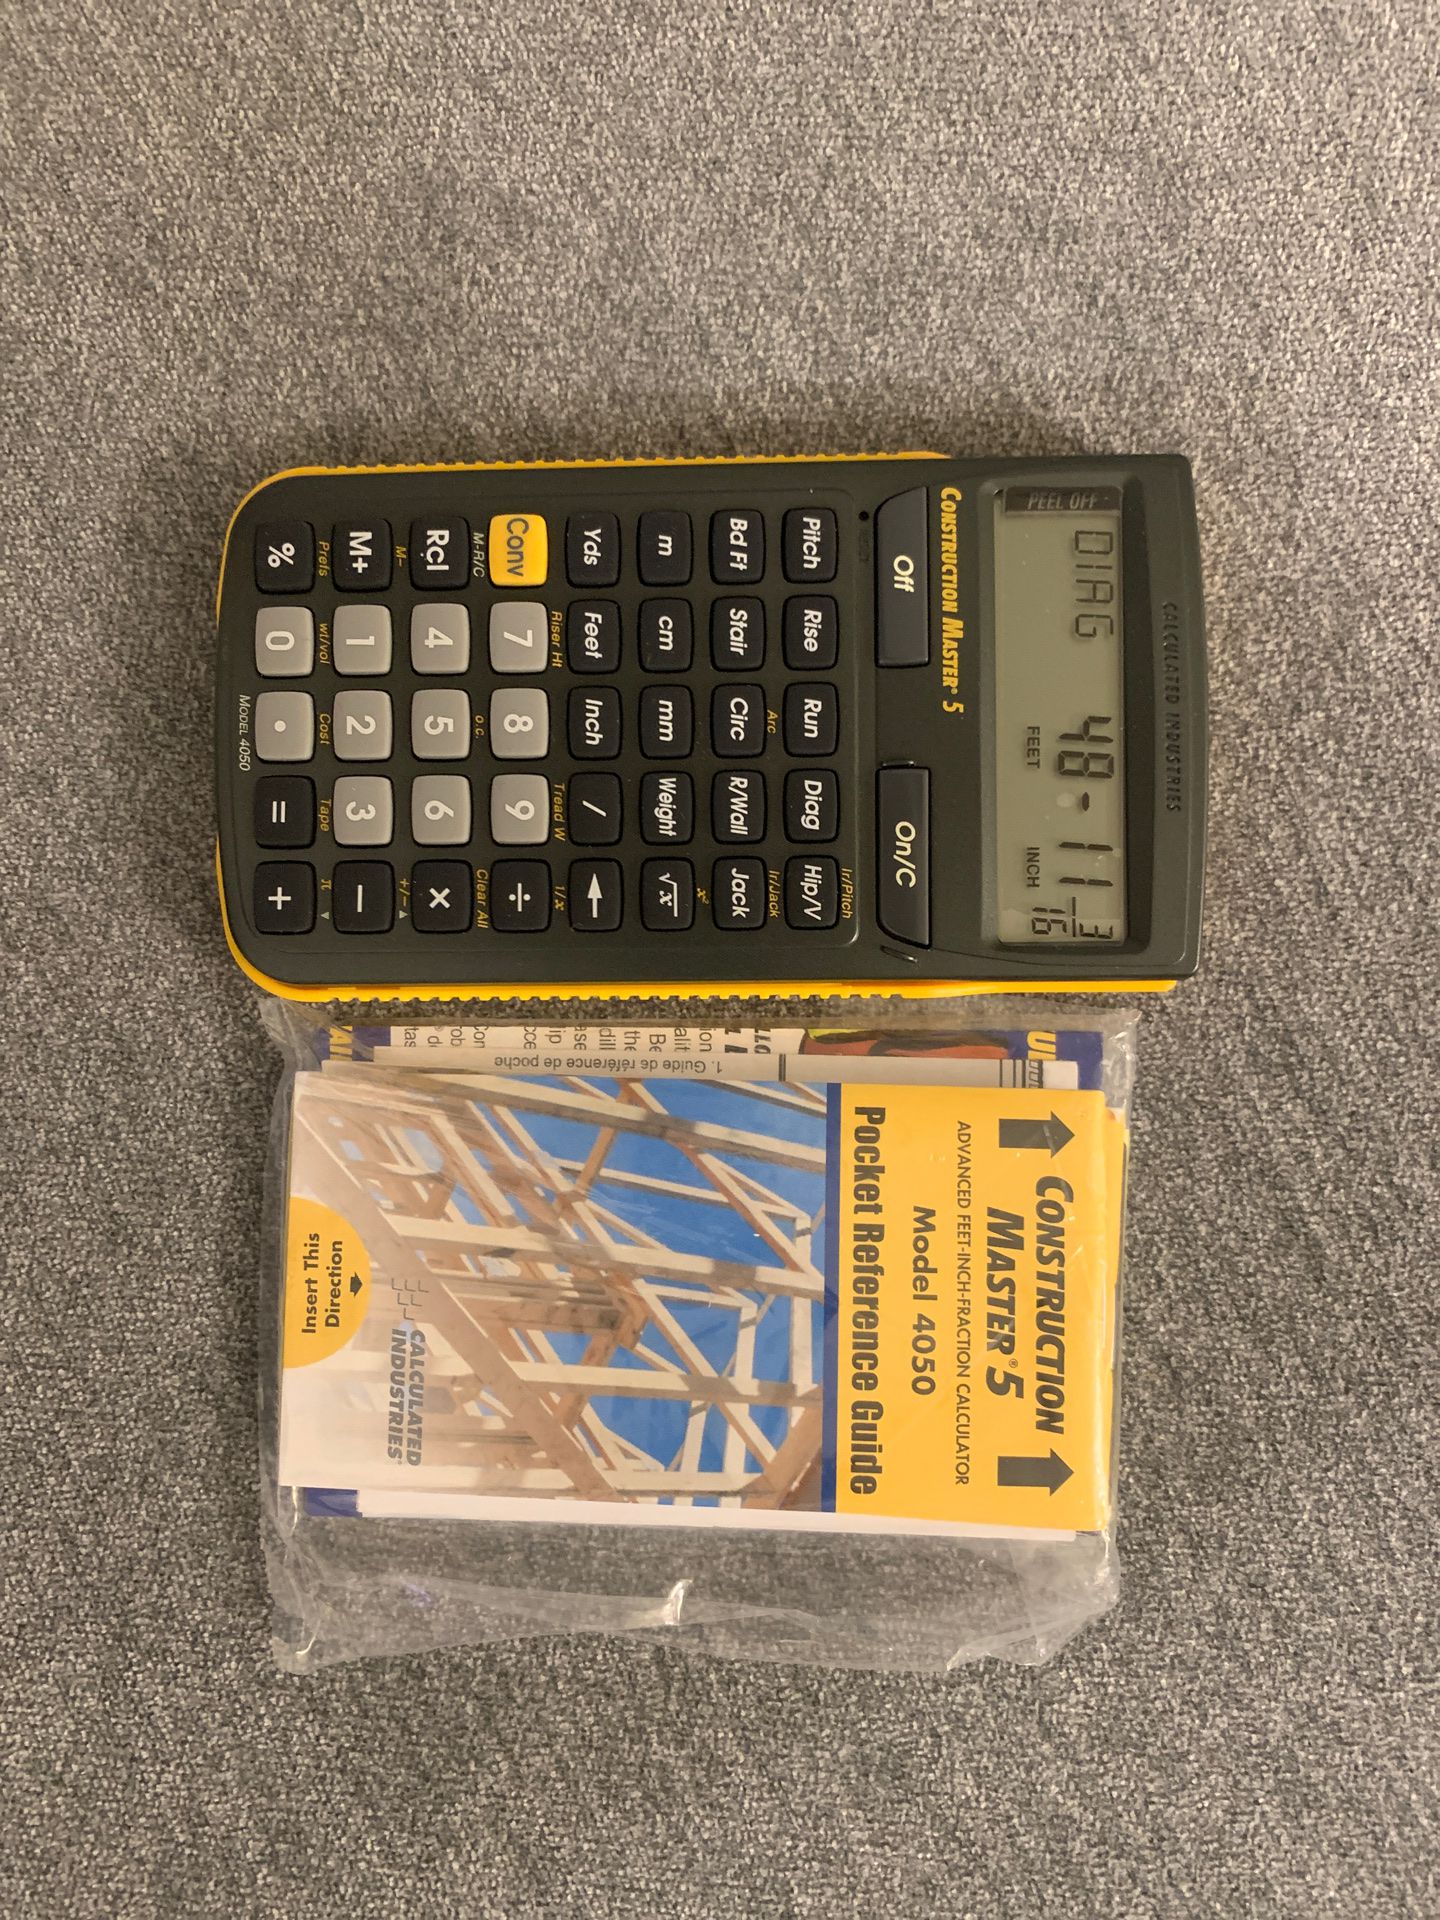 Construction Master 5 Model 4050 calculator